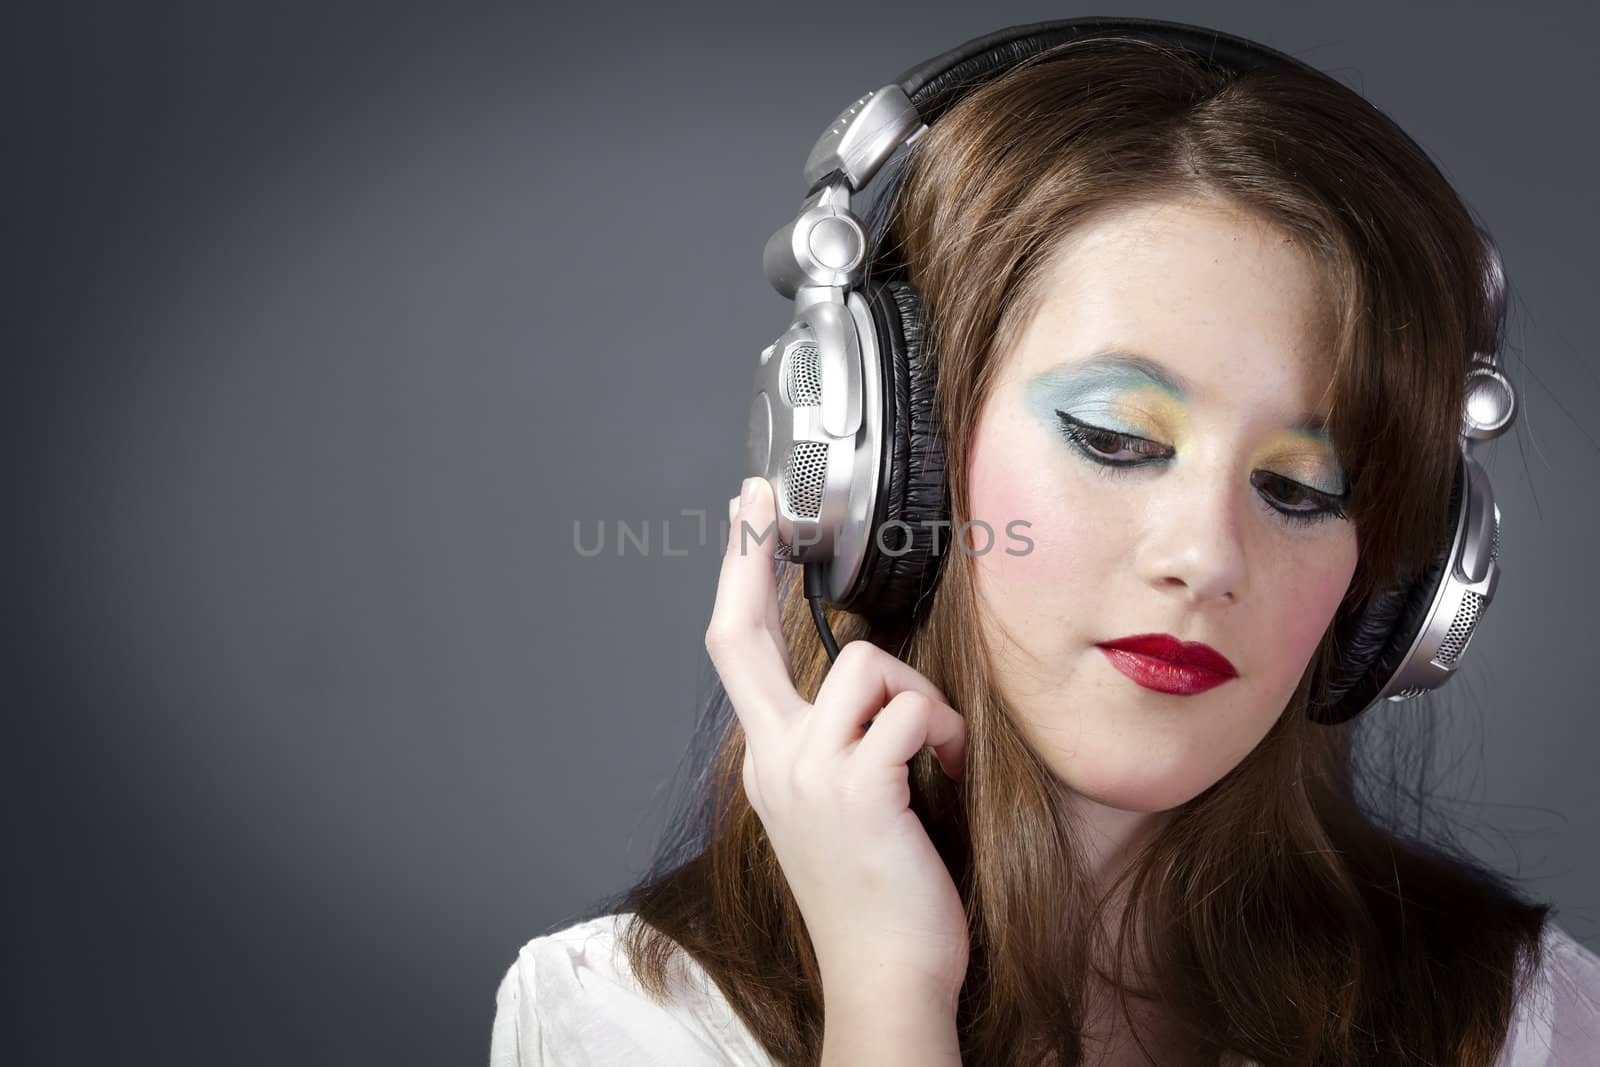 Girl listening music in her room by FernandoCortes